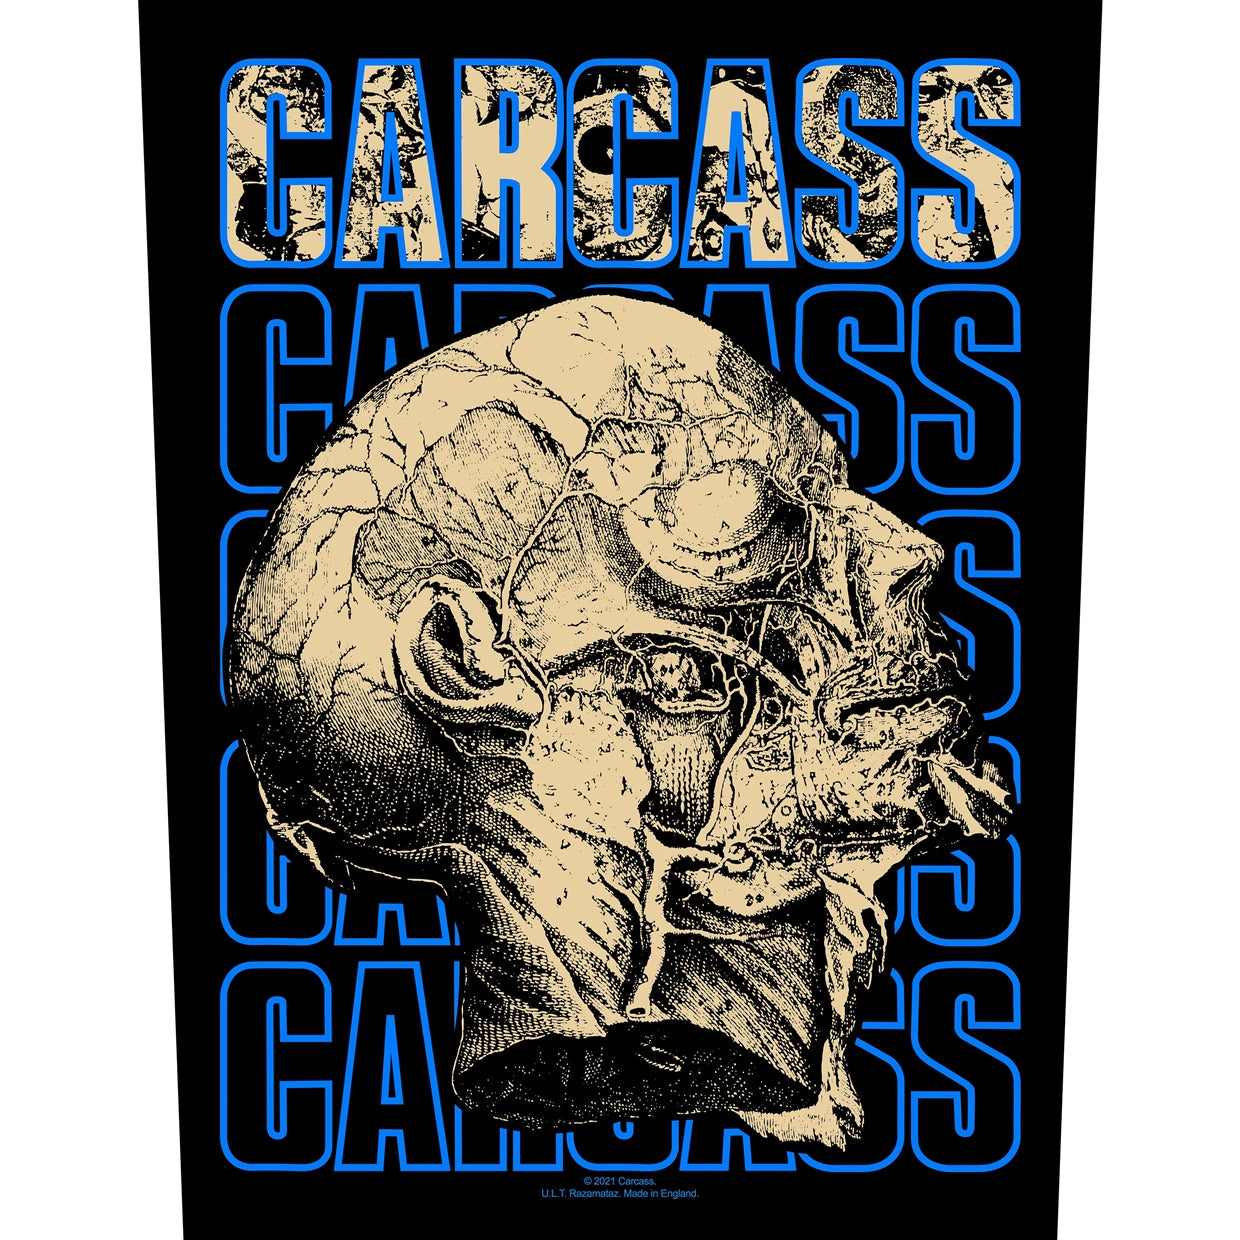 Carcass "Necro Head" Back Patch